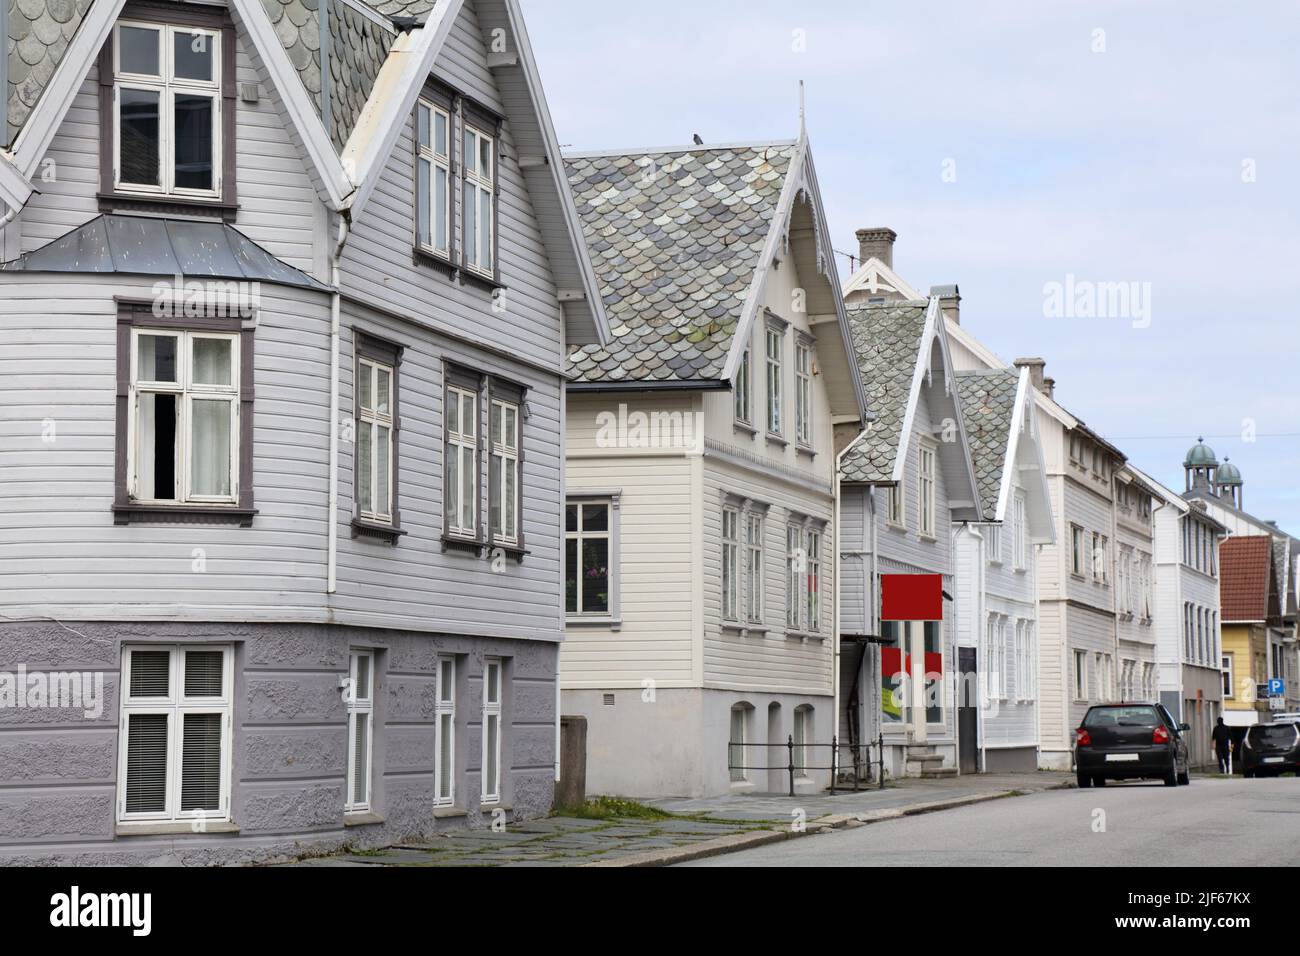 Haugesund town in Norway. Street view with Norwegian architecture. Stock Photo